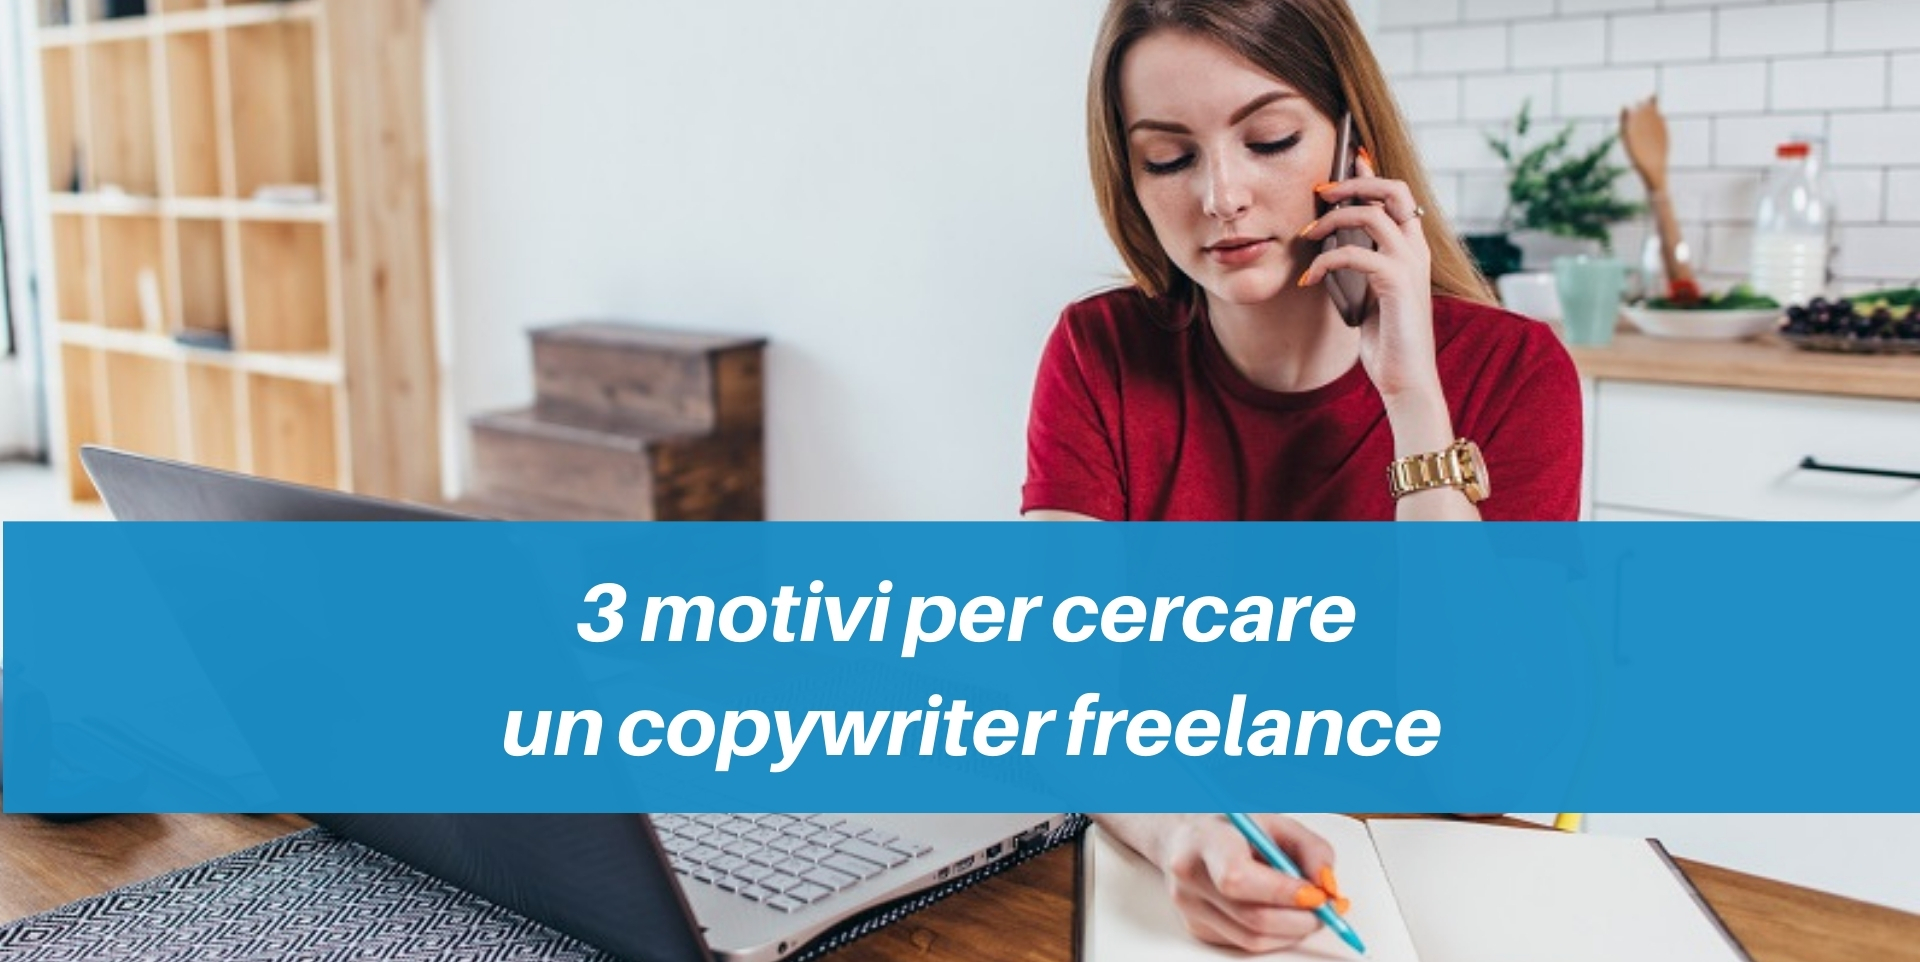 Copywriter Freelance 3 Motivi Per Sceglierlo